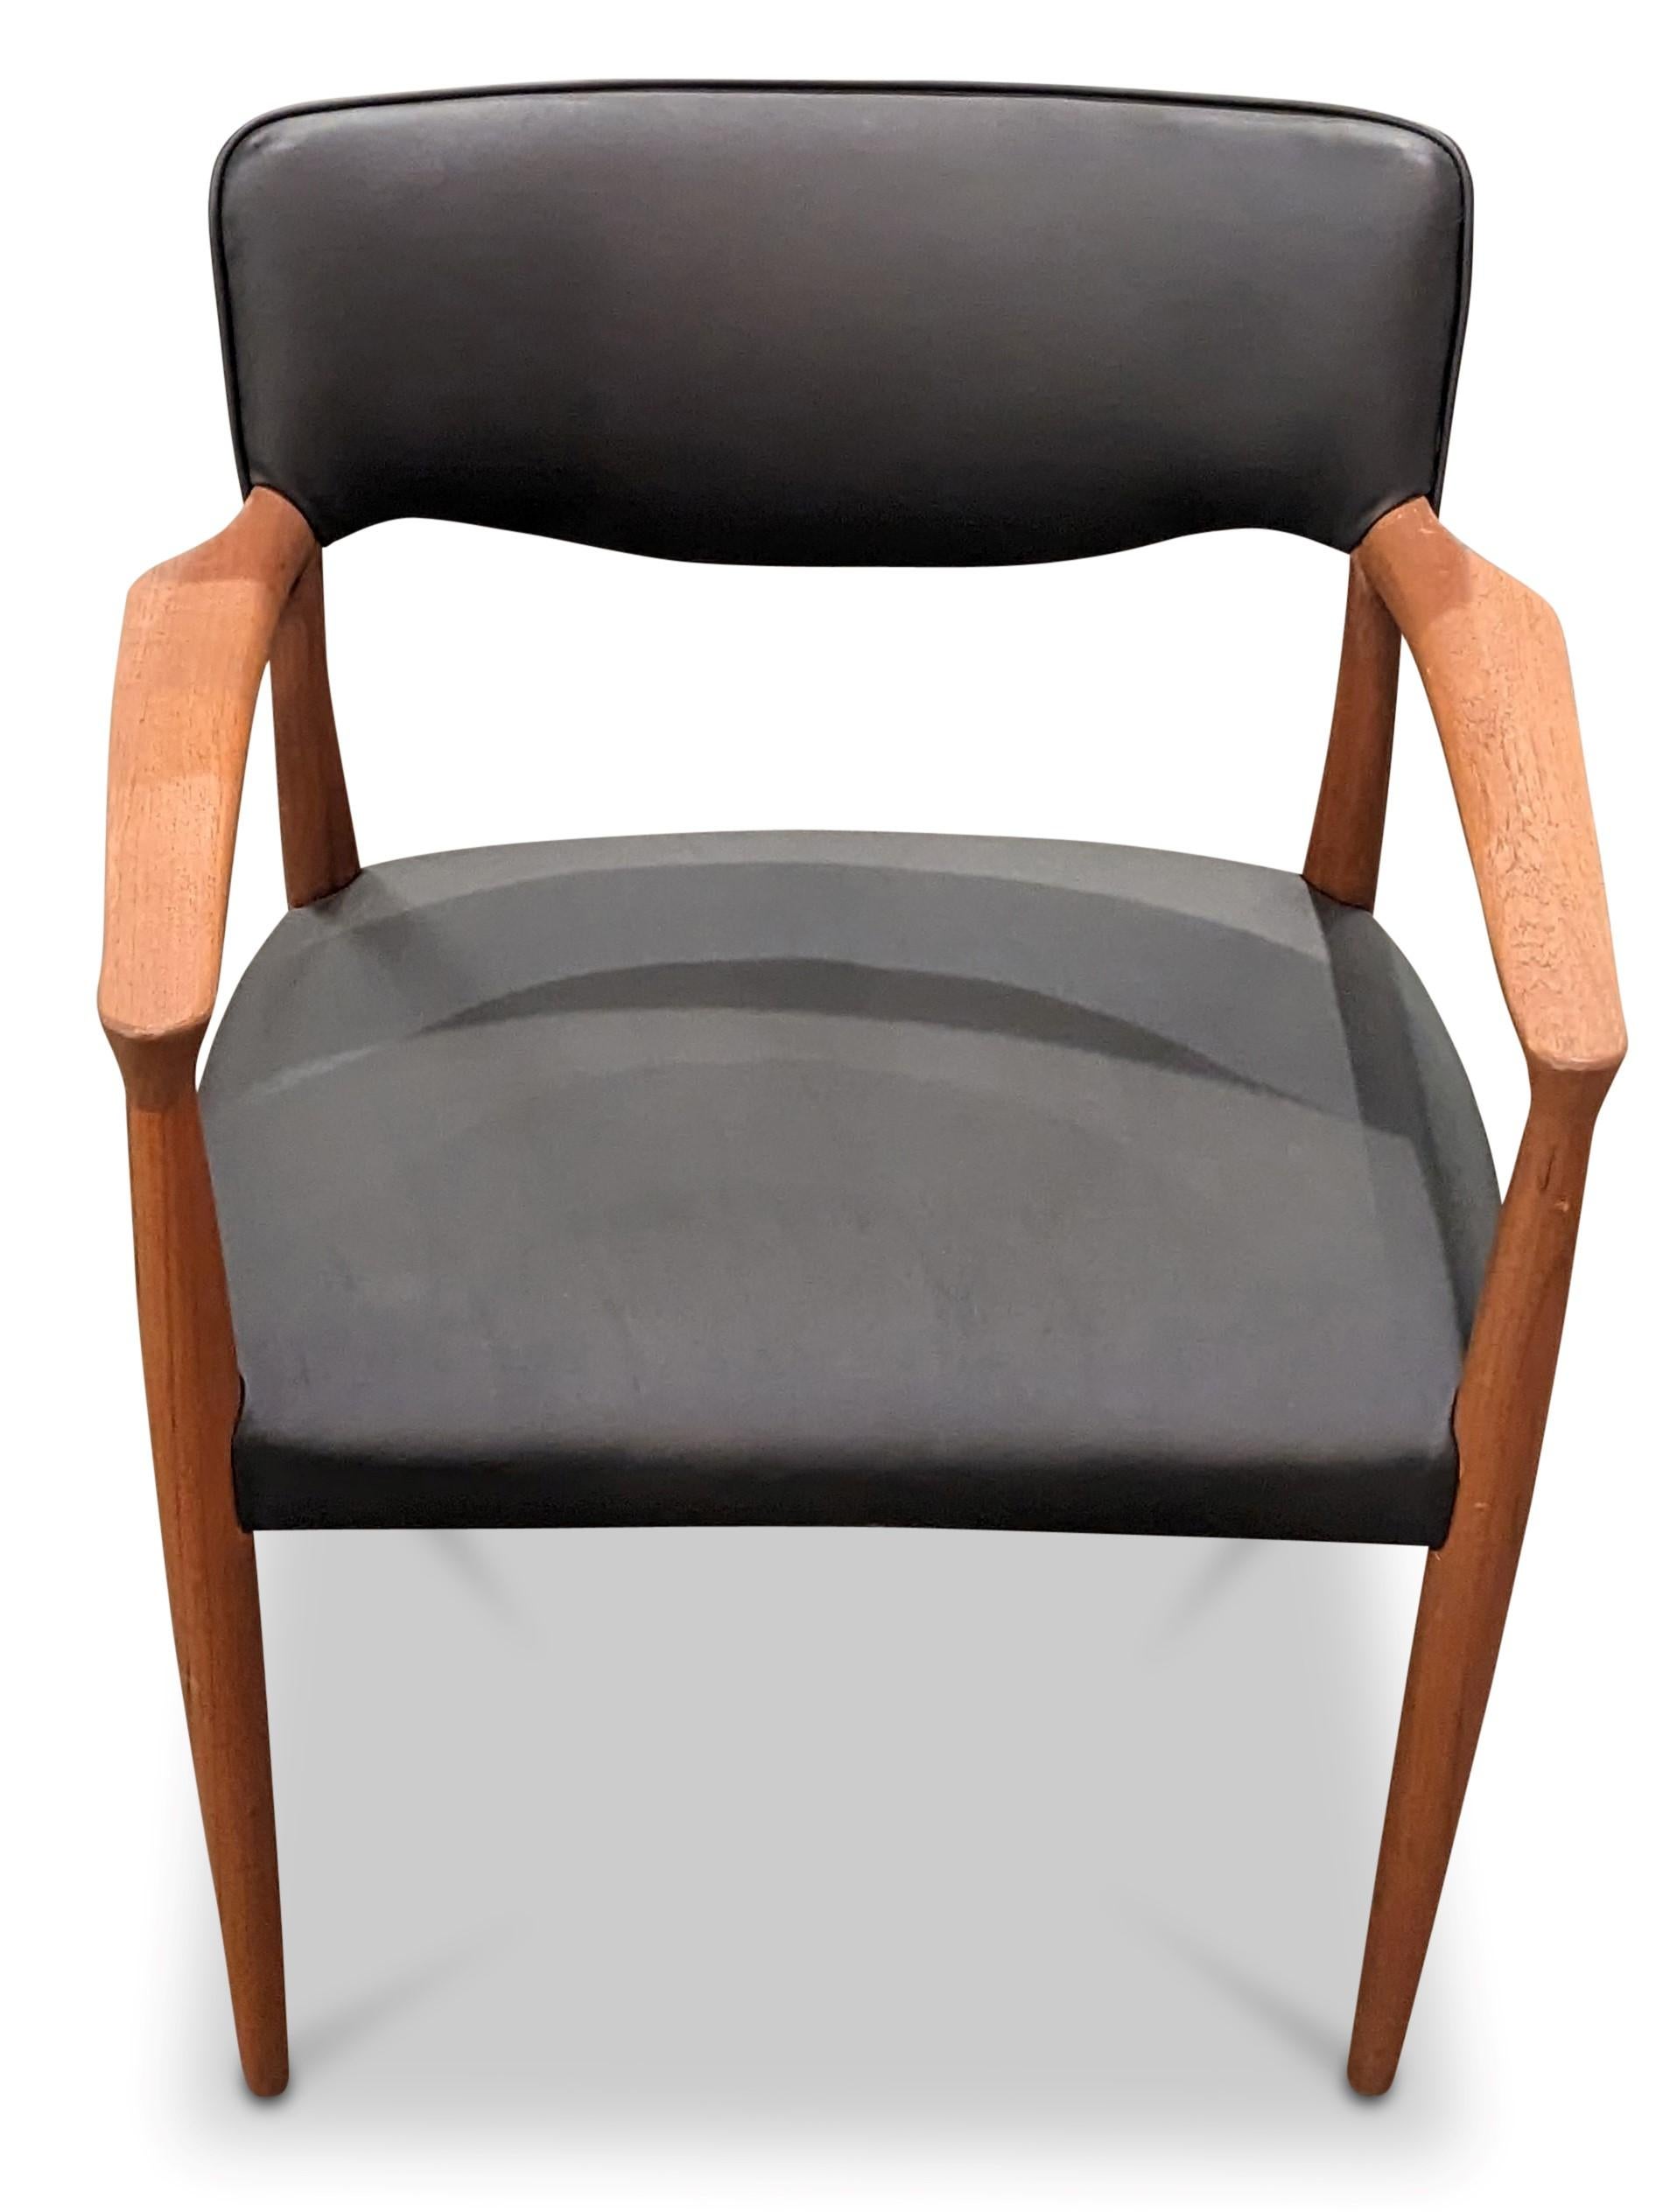 Vintage Danish Mid Century Teak Arm / Desk Chair - 122206 1